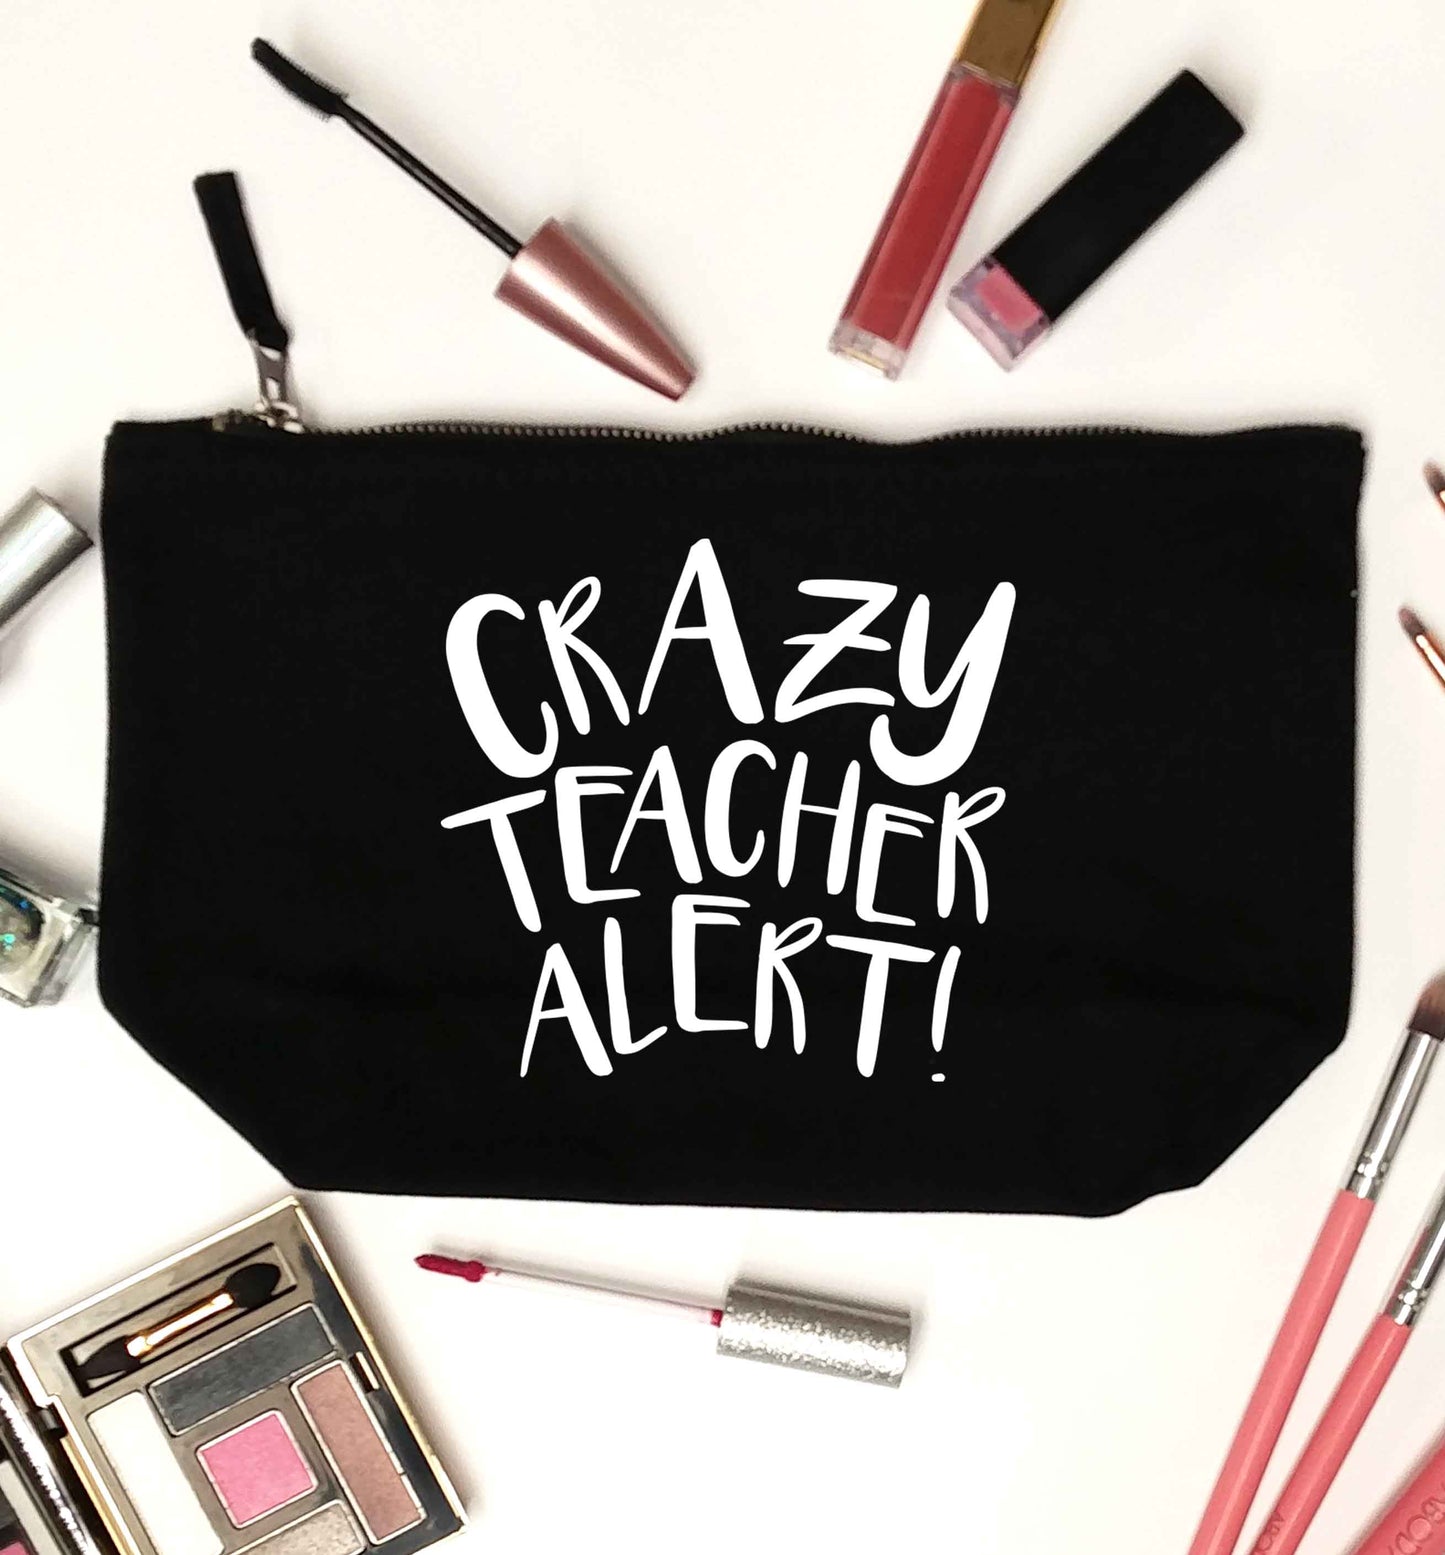 Crazy teacher alert black makeup bag